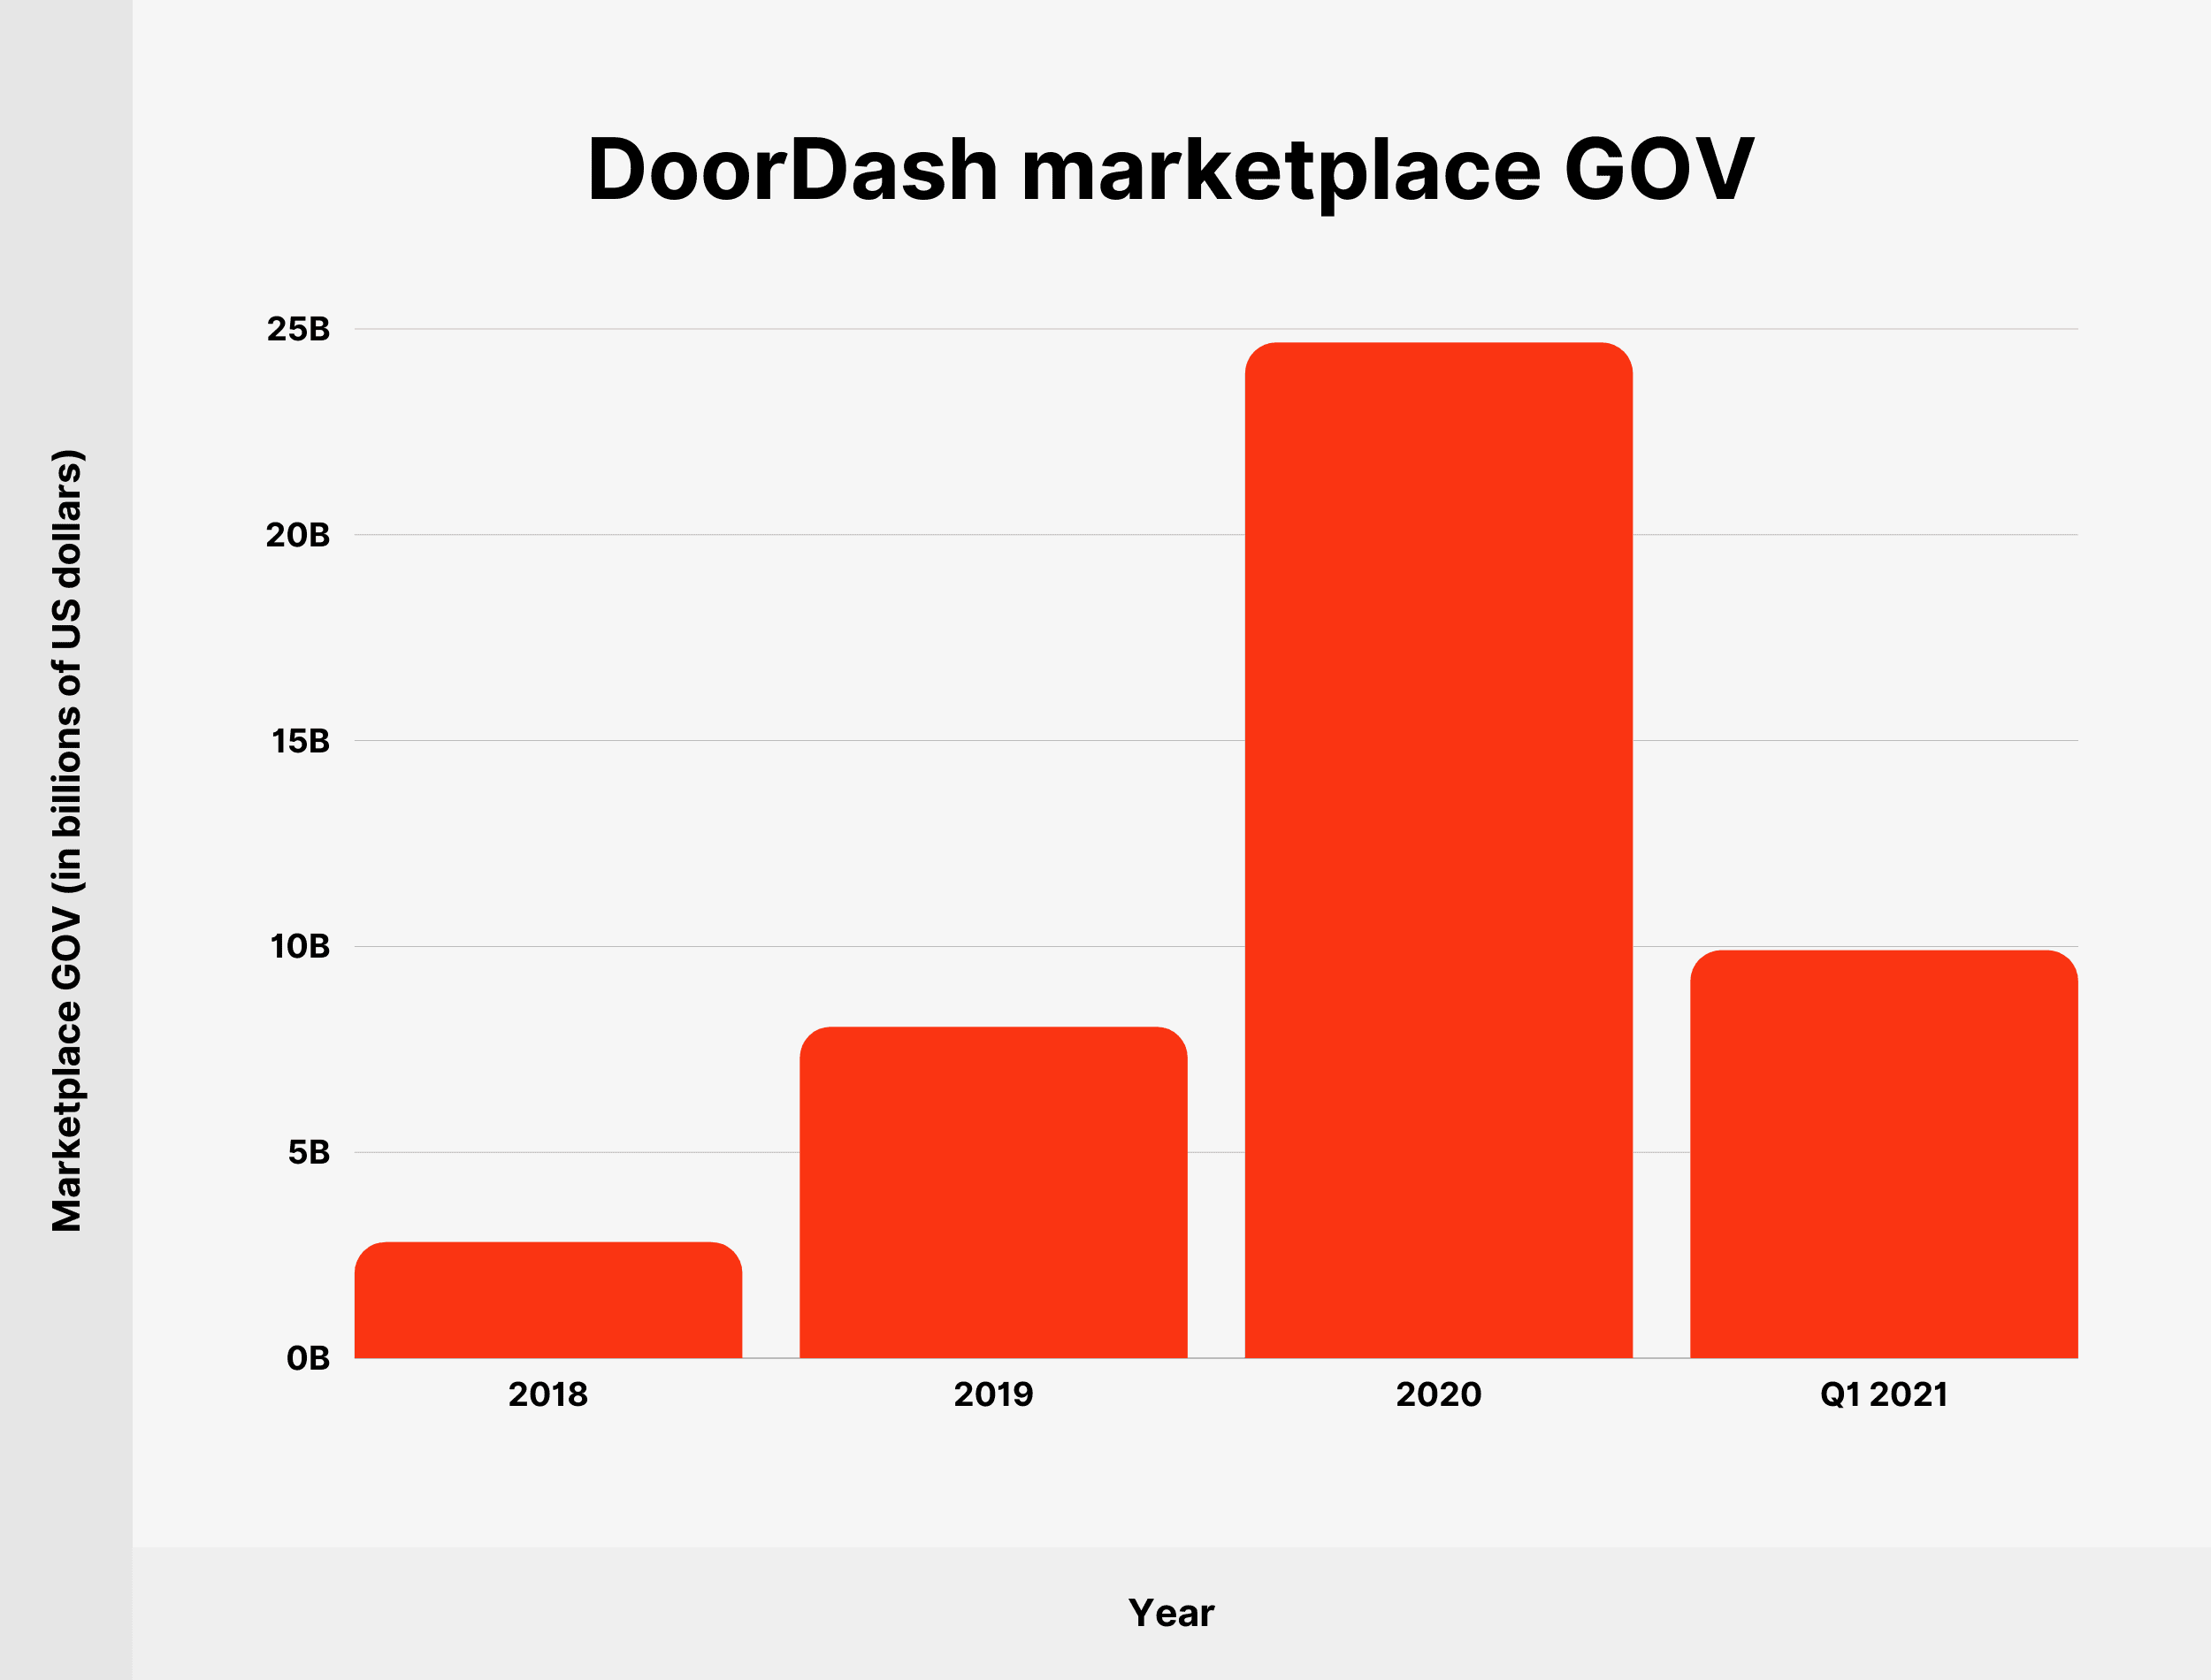 DoorDash marketplace GOV